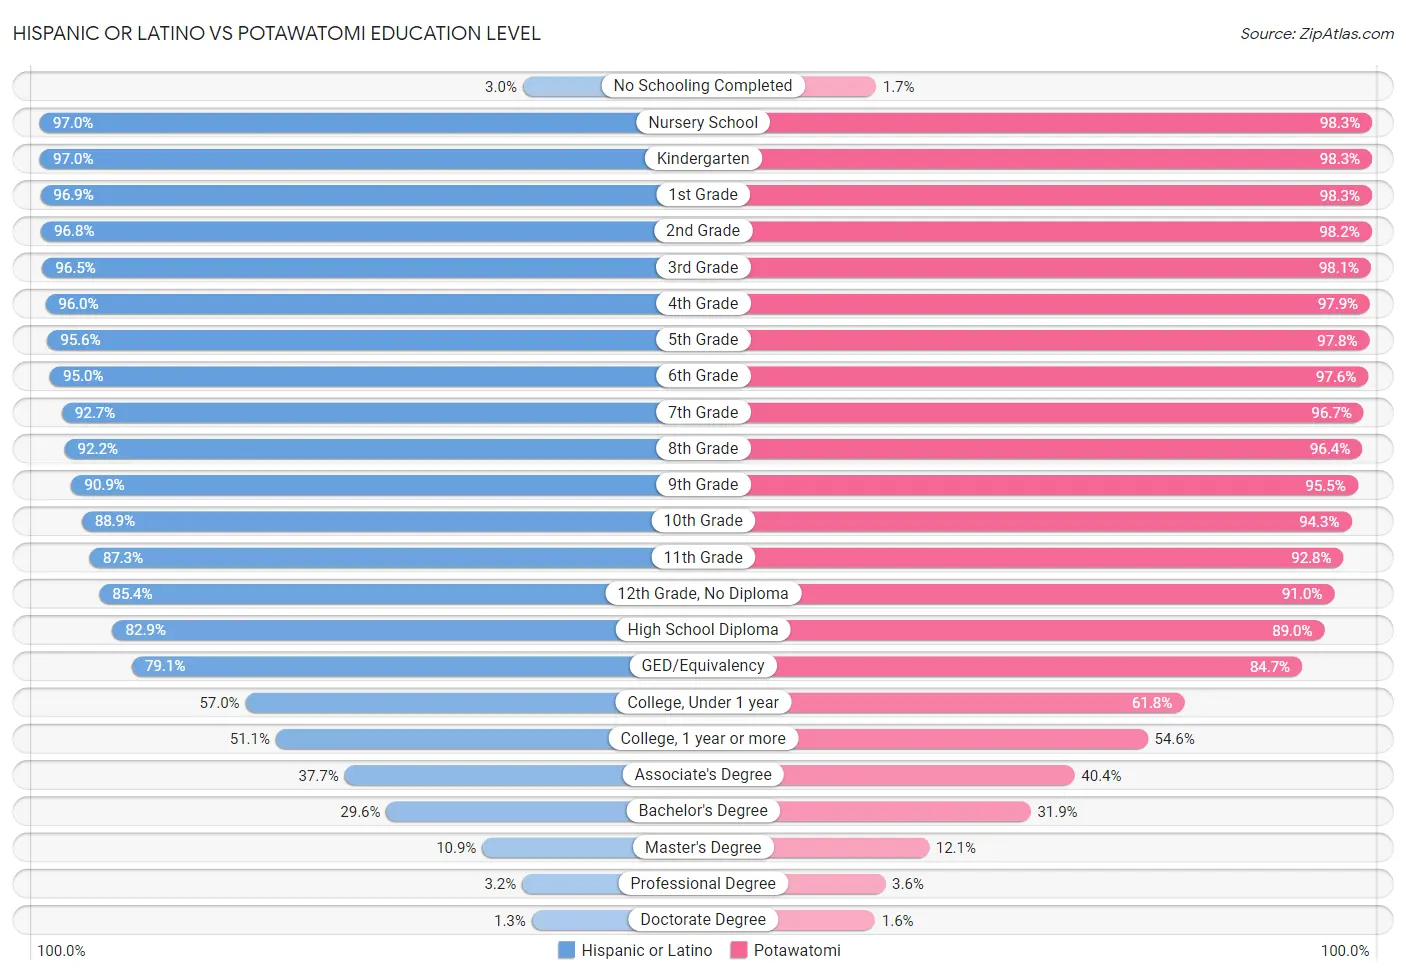 Hispanic or Latino vs Potawatomi Education Level